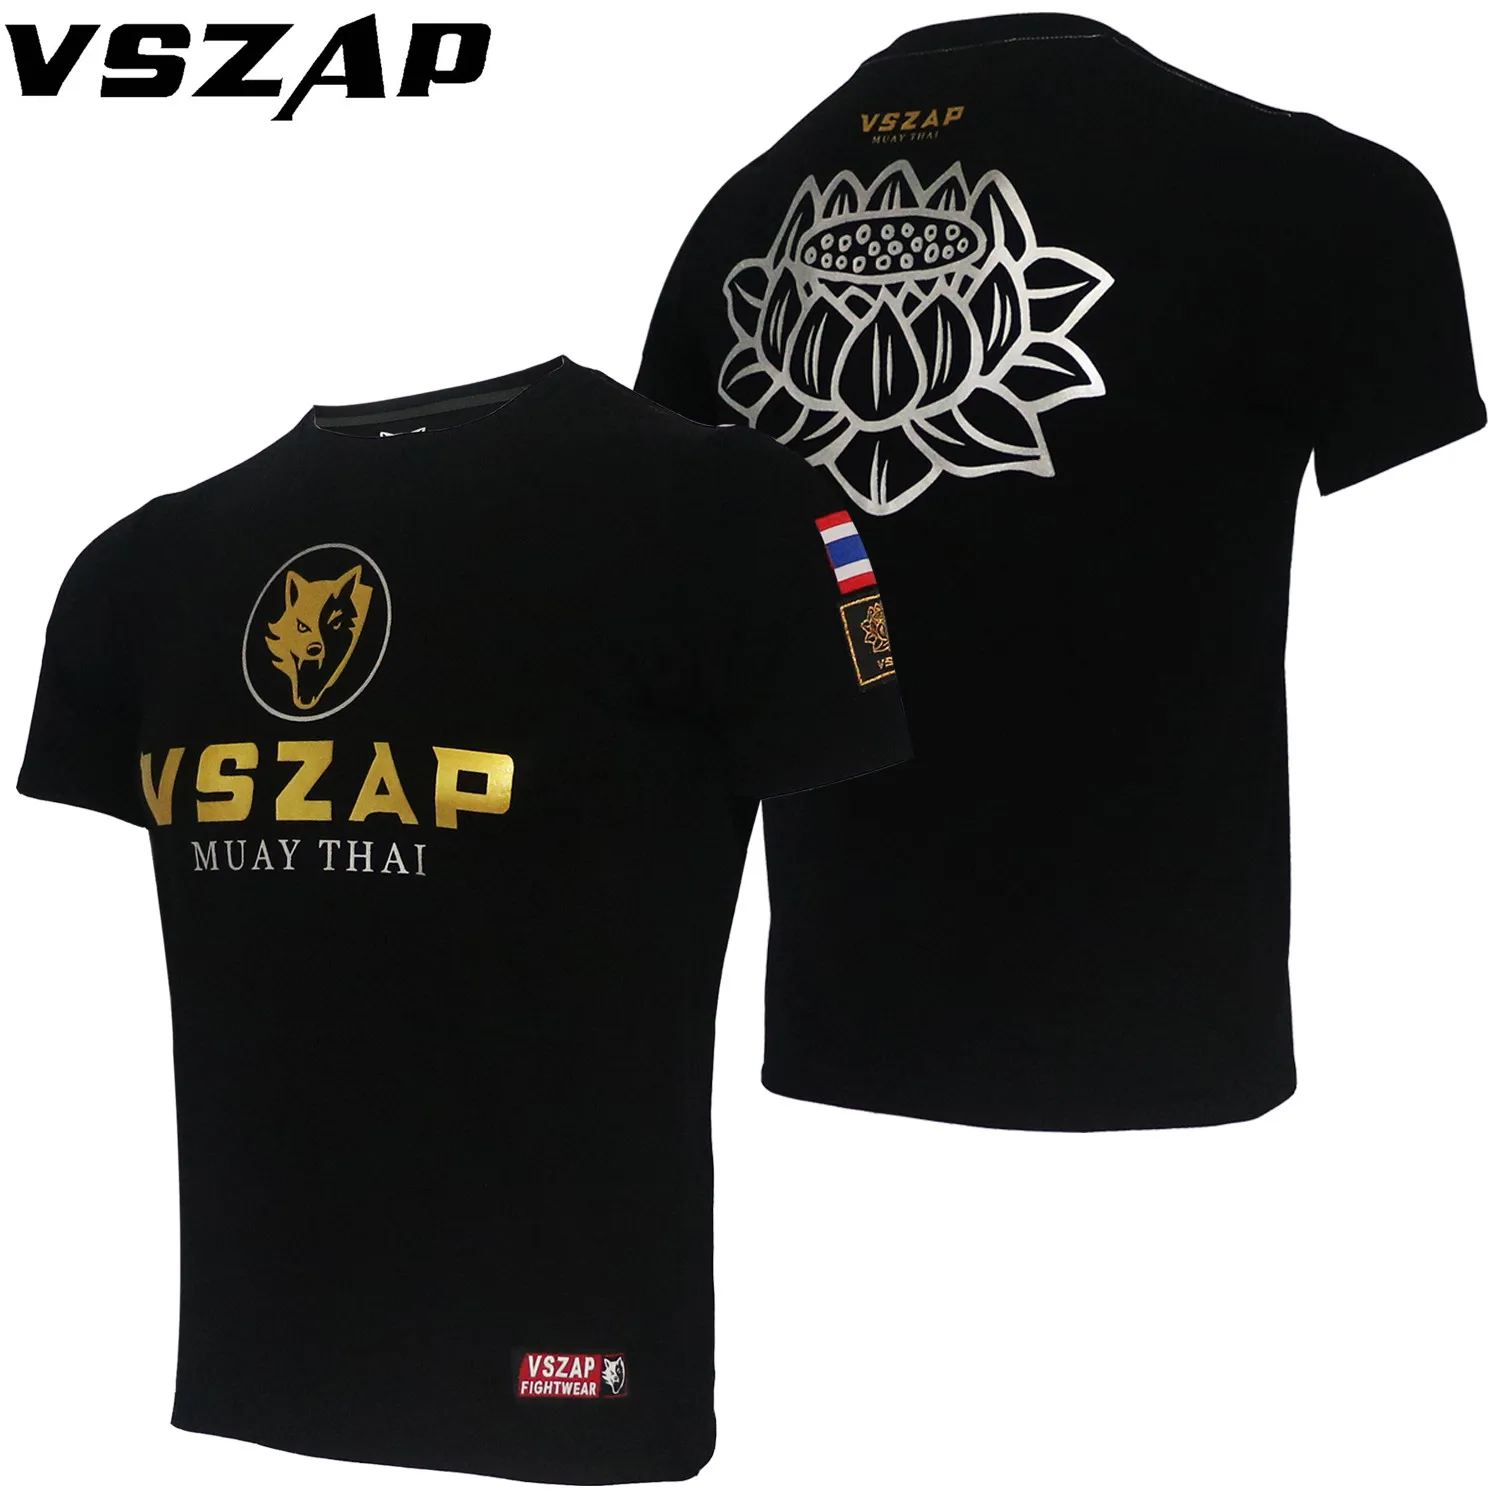 

VSZAP Muay Thai T Shirt Lotus pattern Men Homme Boxing MMA T Shirt Gym Shirt Fighting Martial Fitness jiu jitsu Training Cloth